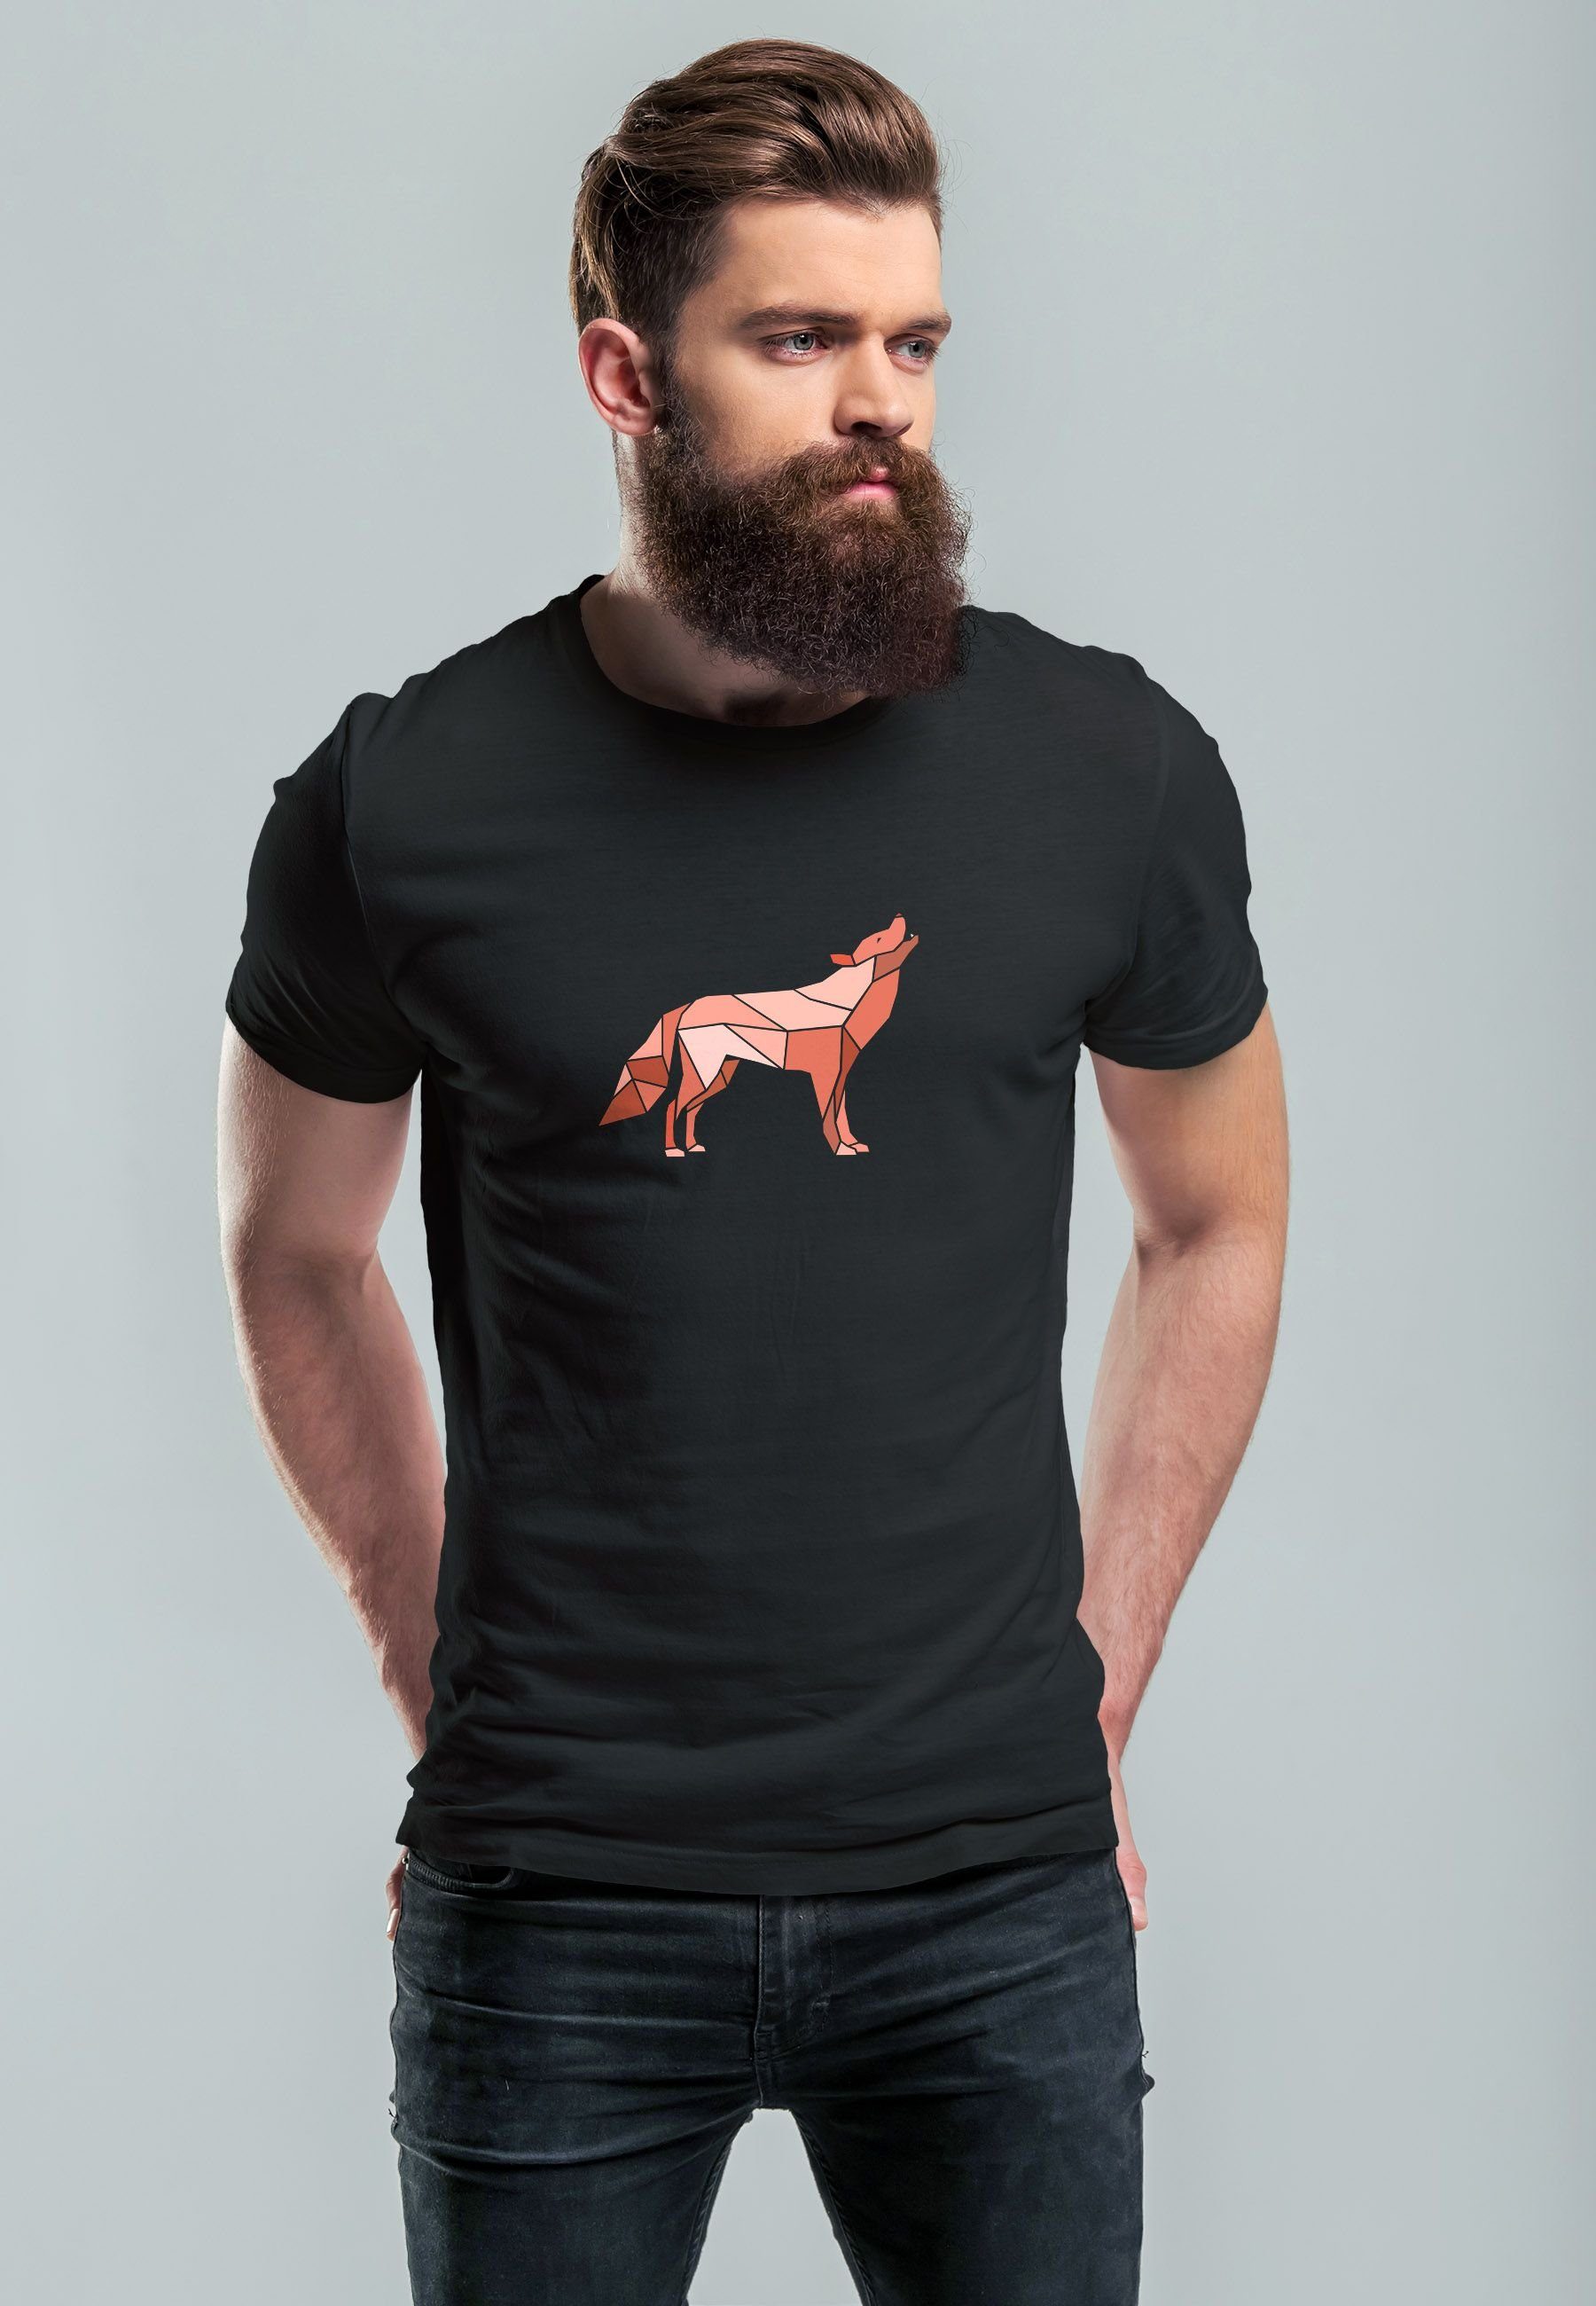 Neverless Print-Shirt Herren T-Shirt Bedruckt schwarz Fashion Tiermotiv Outdoor mit Polygon Wolf Grafik Print